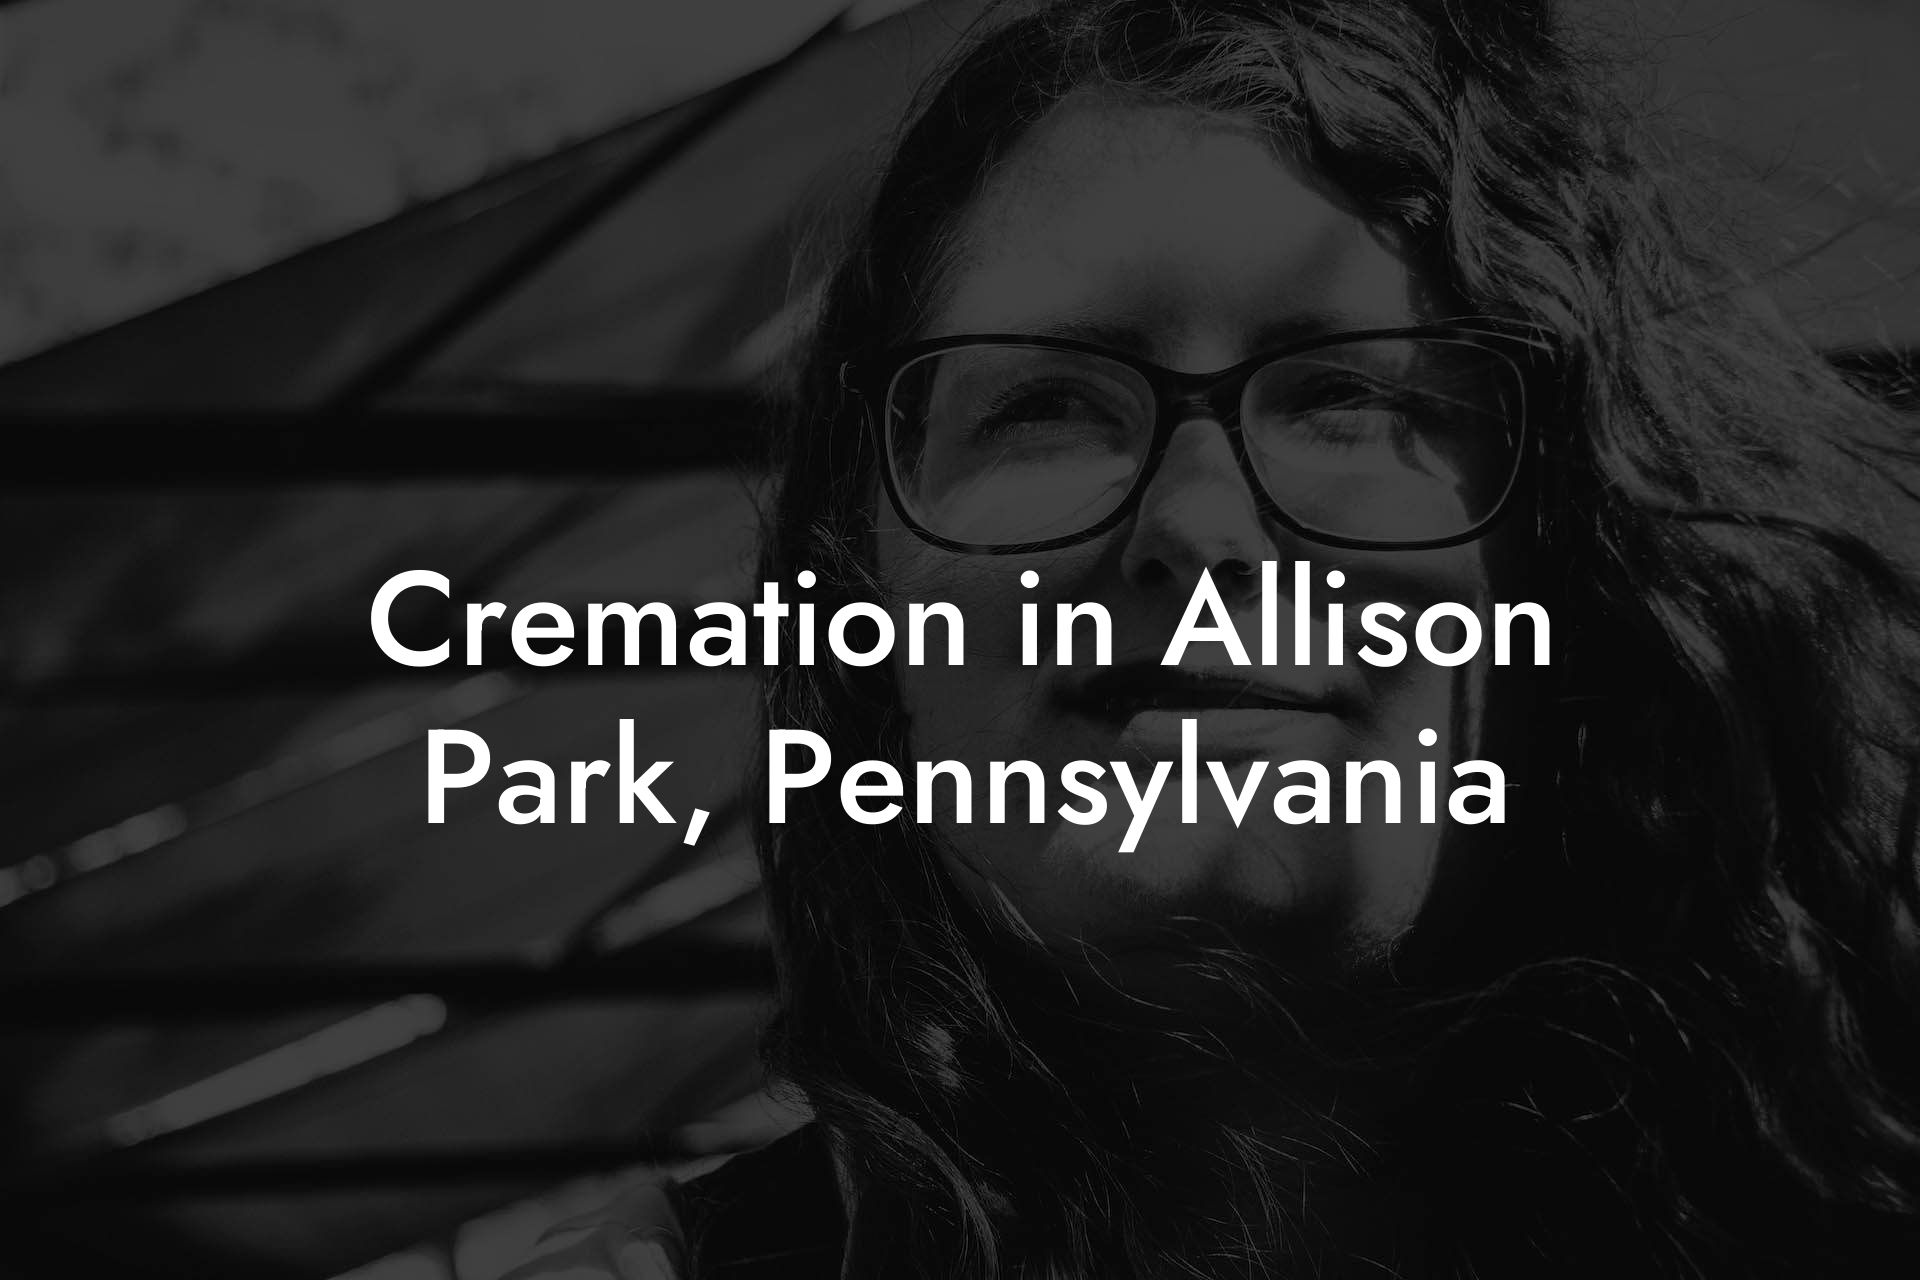 Cremation in Allison Park, Pennsylvania